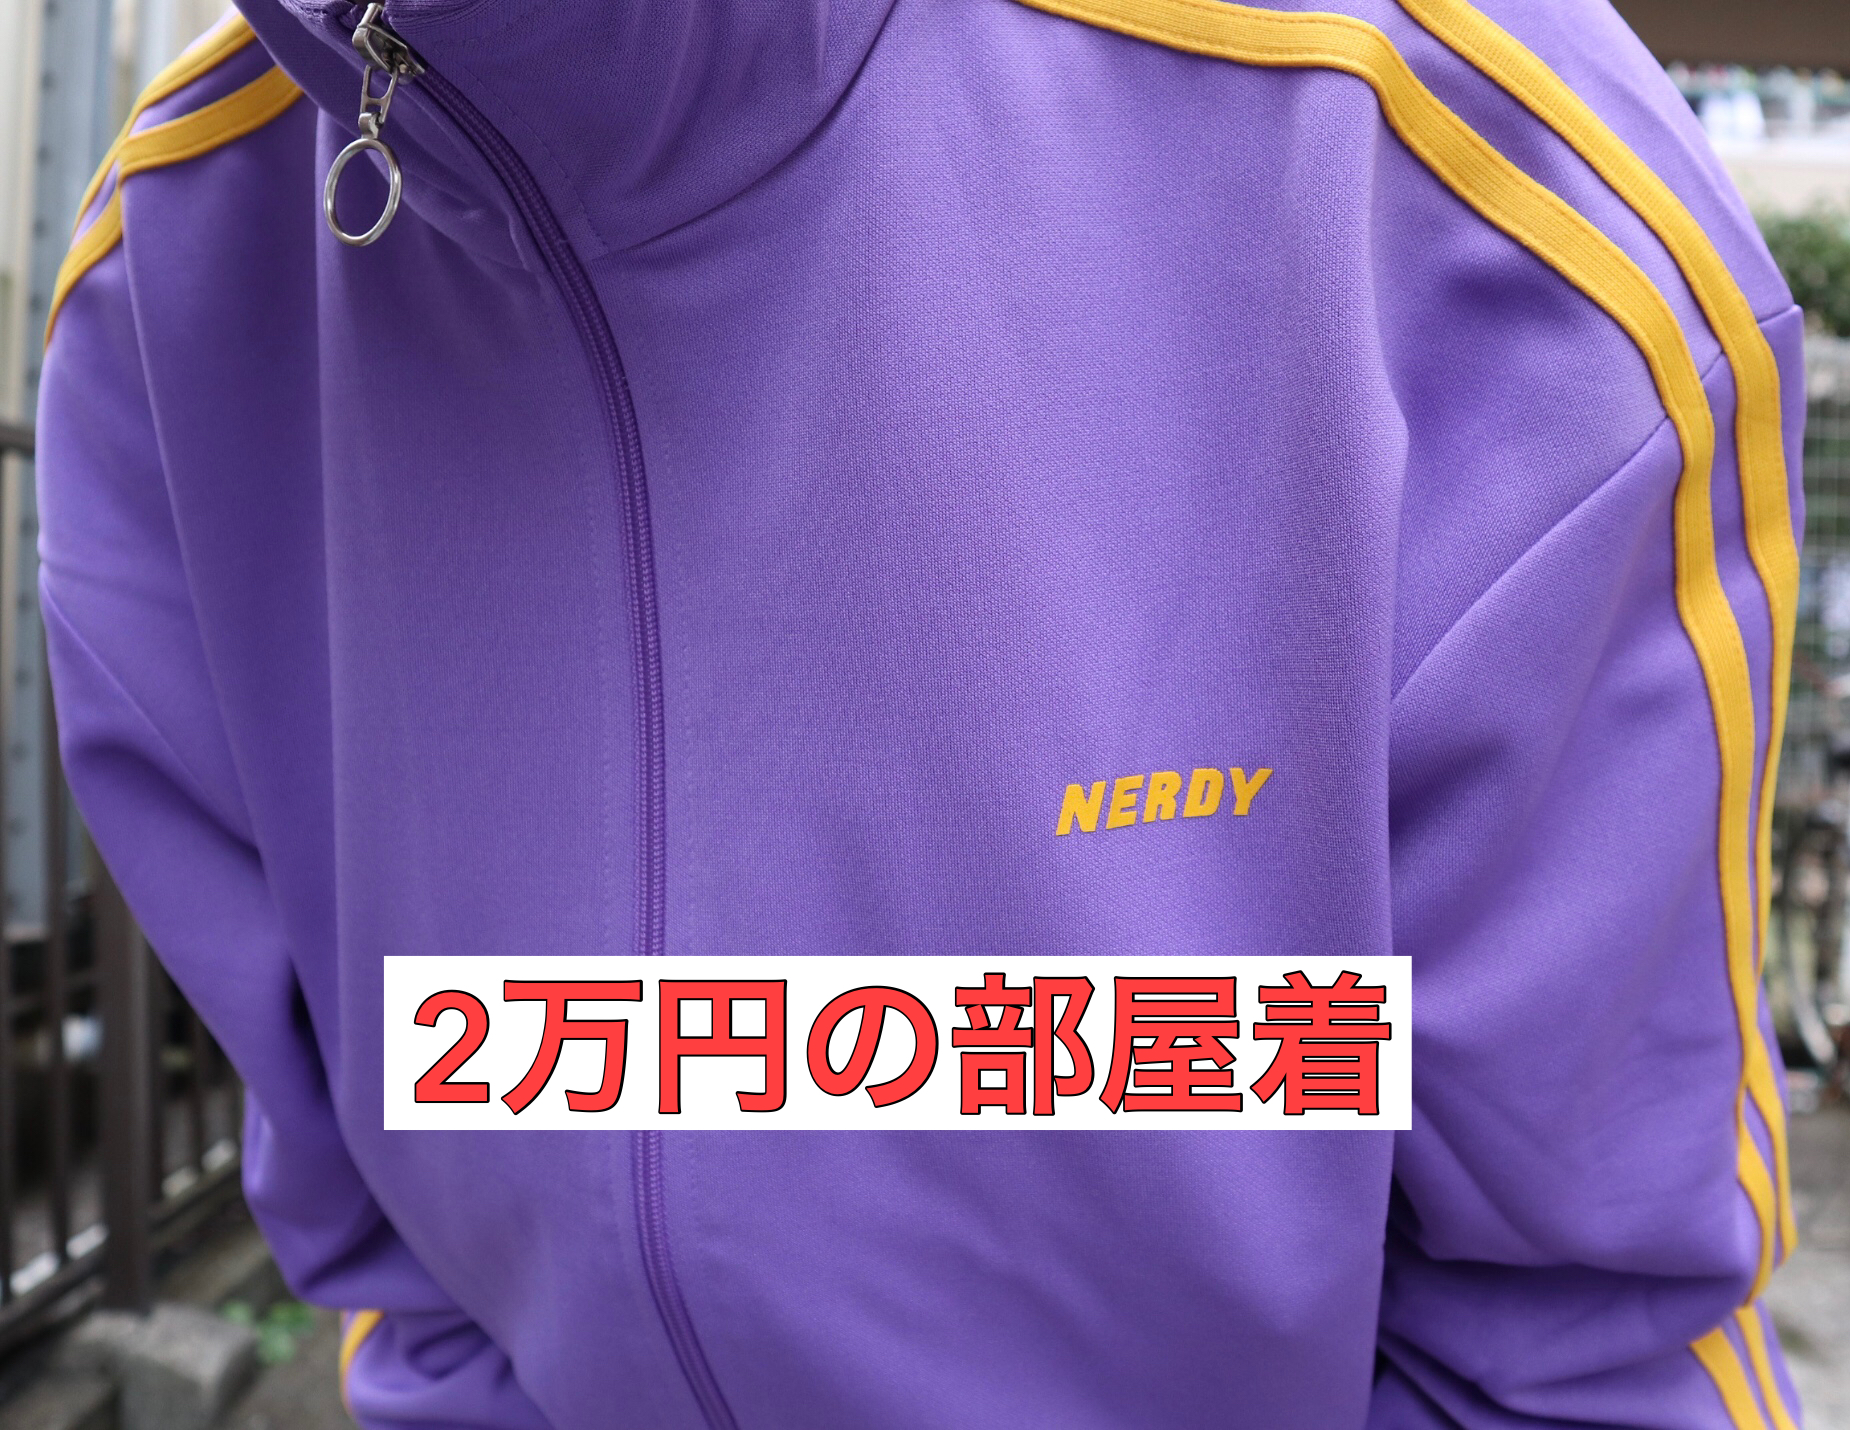 NERDY（ノルディー）の紫ジャージを買った感想【サイズ感レビュー 